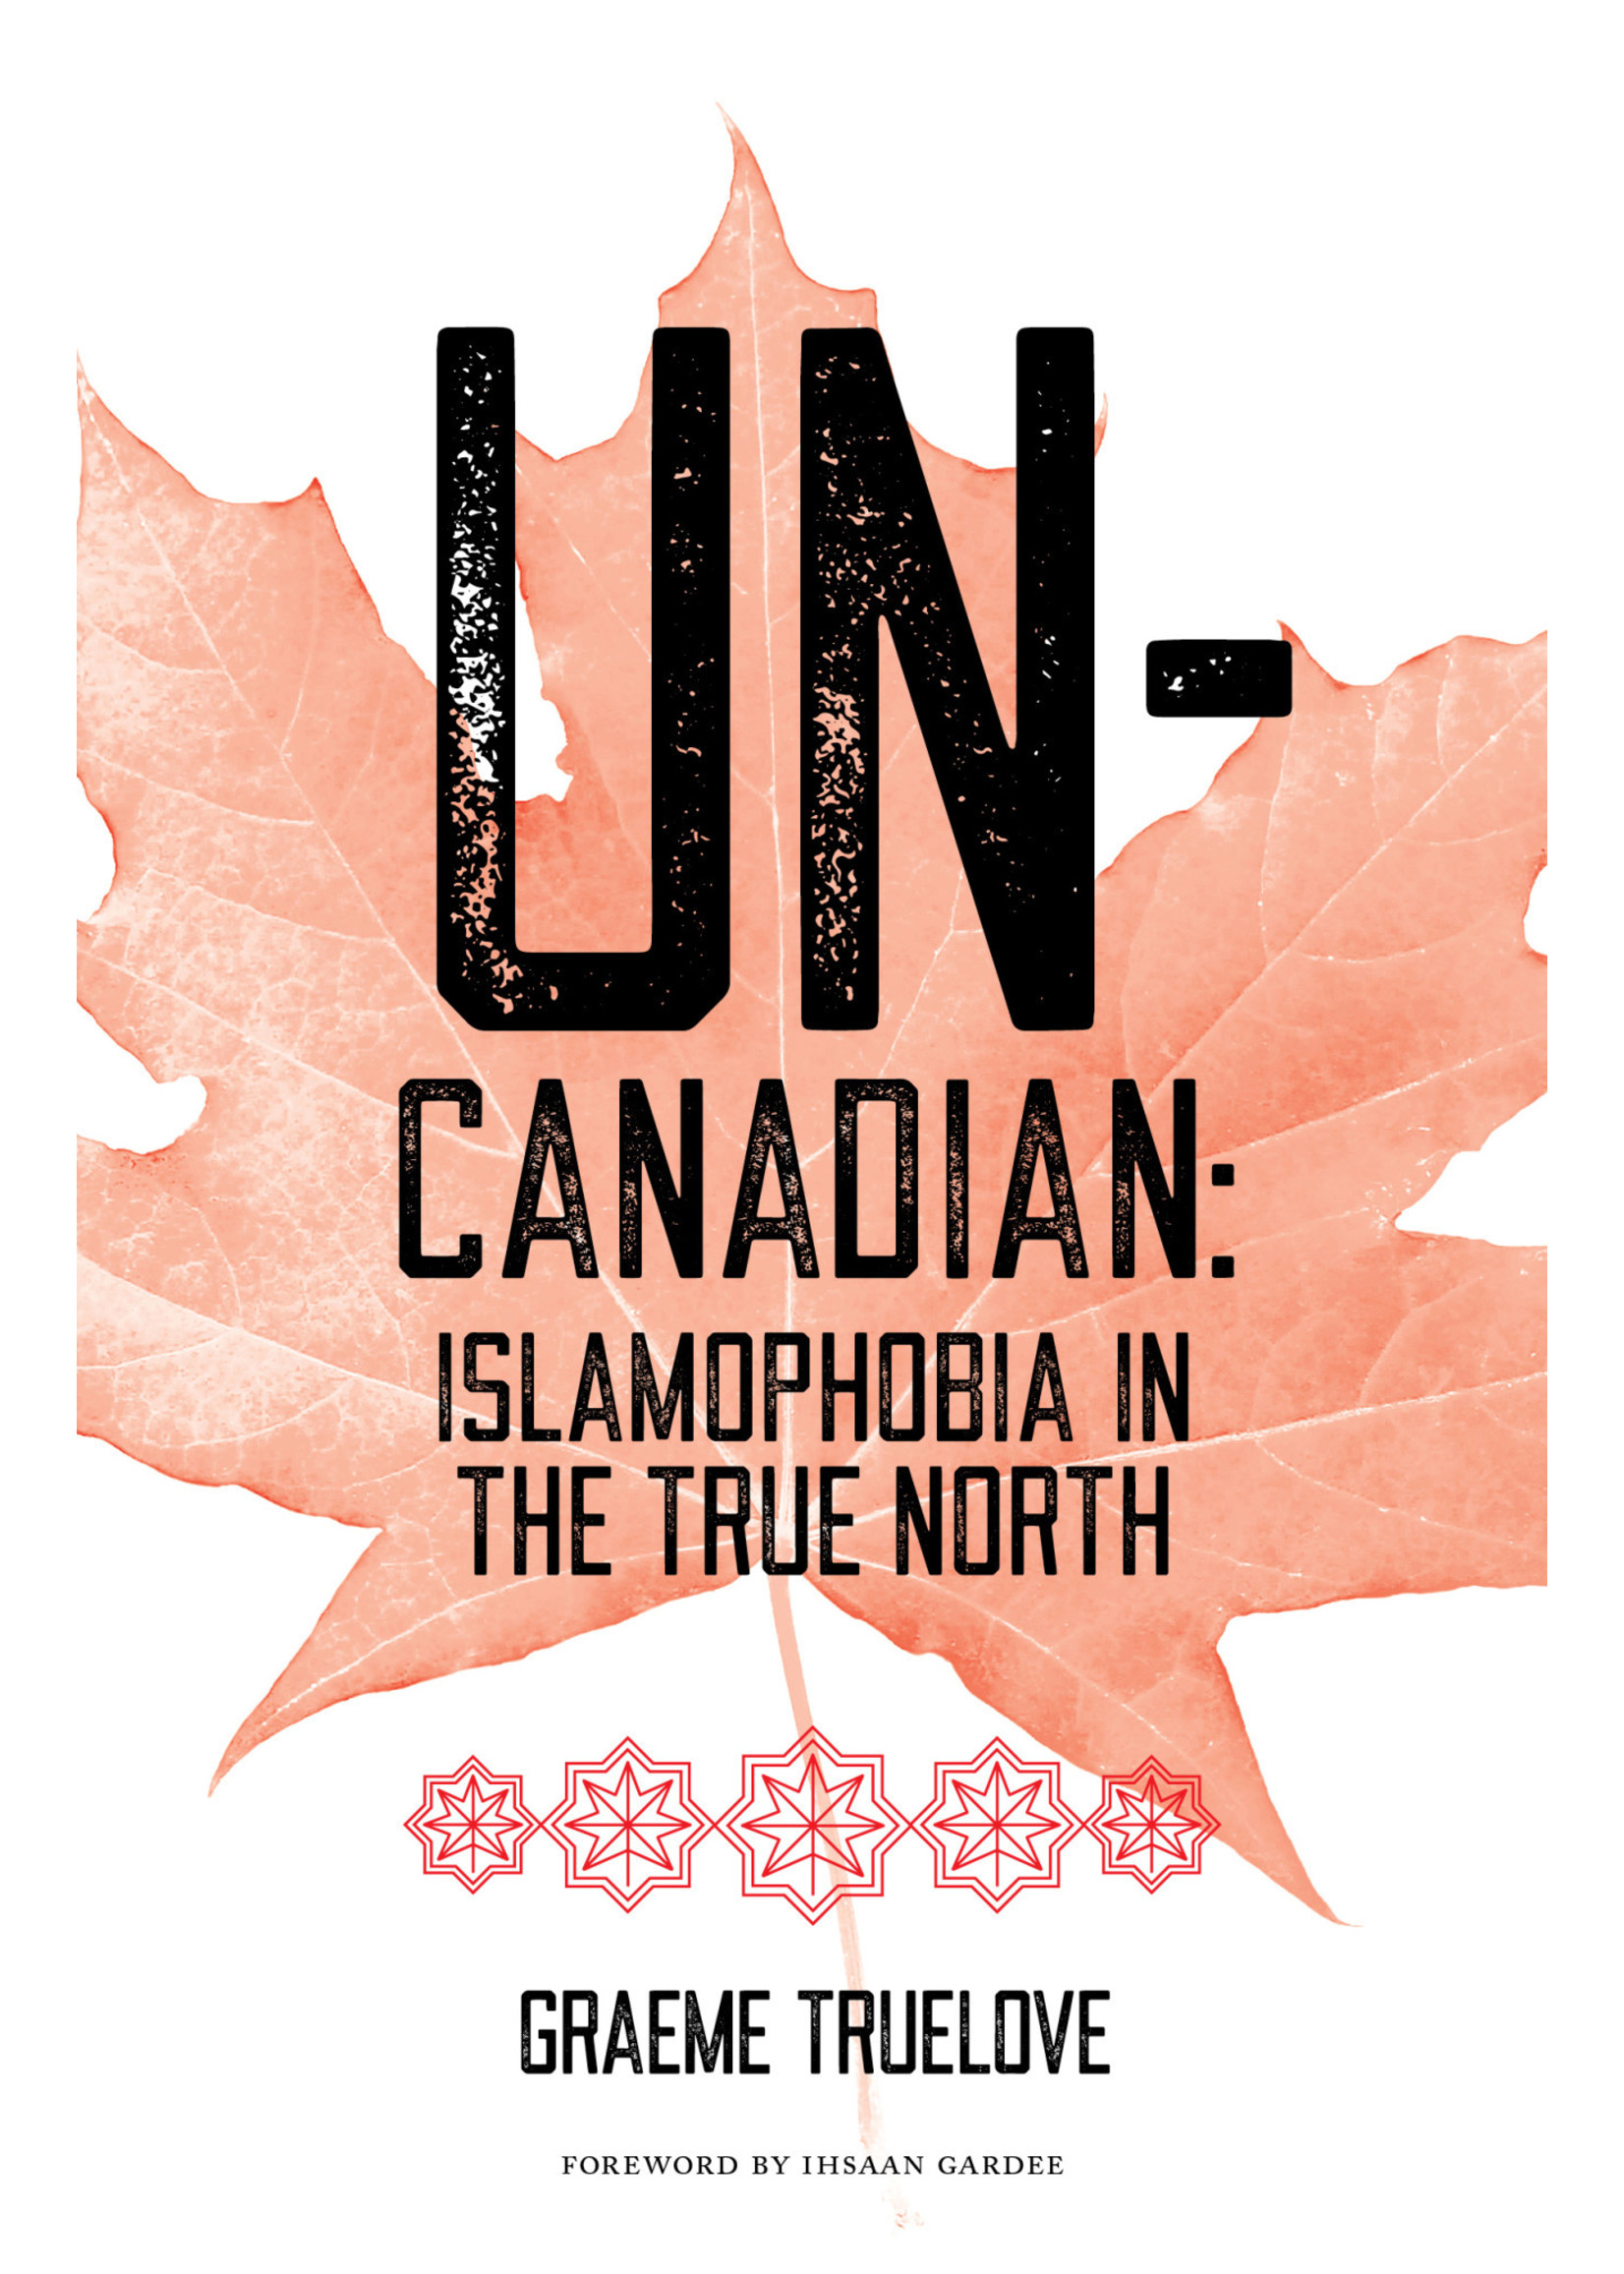 Un-Canadian: Prejudice and Discrimination Against Muslims in Canada by Graeme Truelove